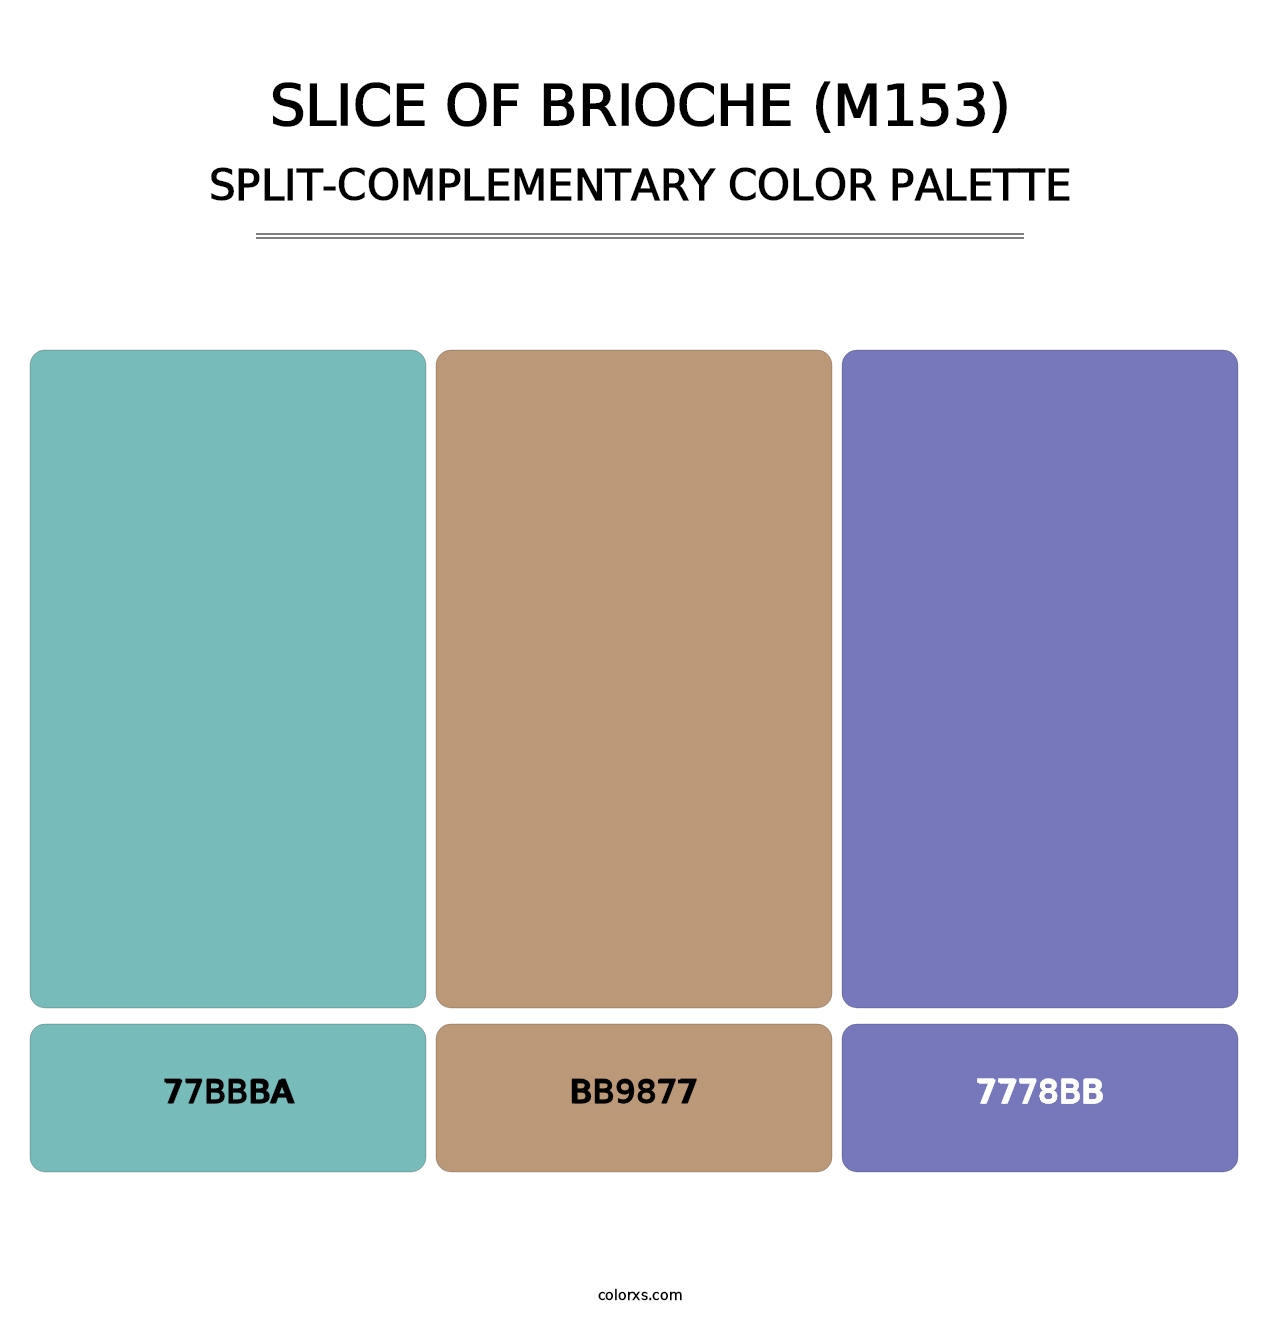 Slice of Brioche (M153) - Split-Complementary Color Palette